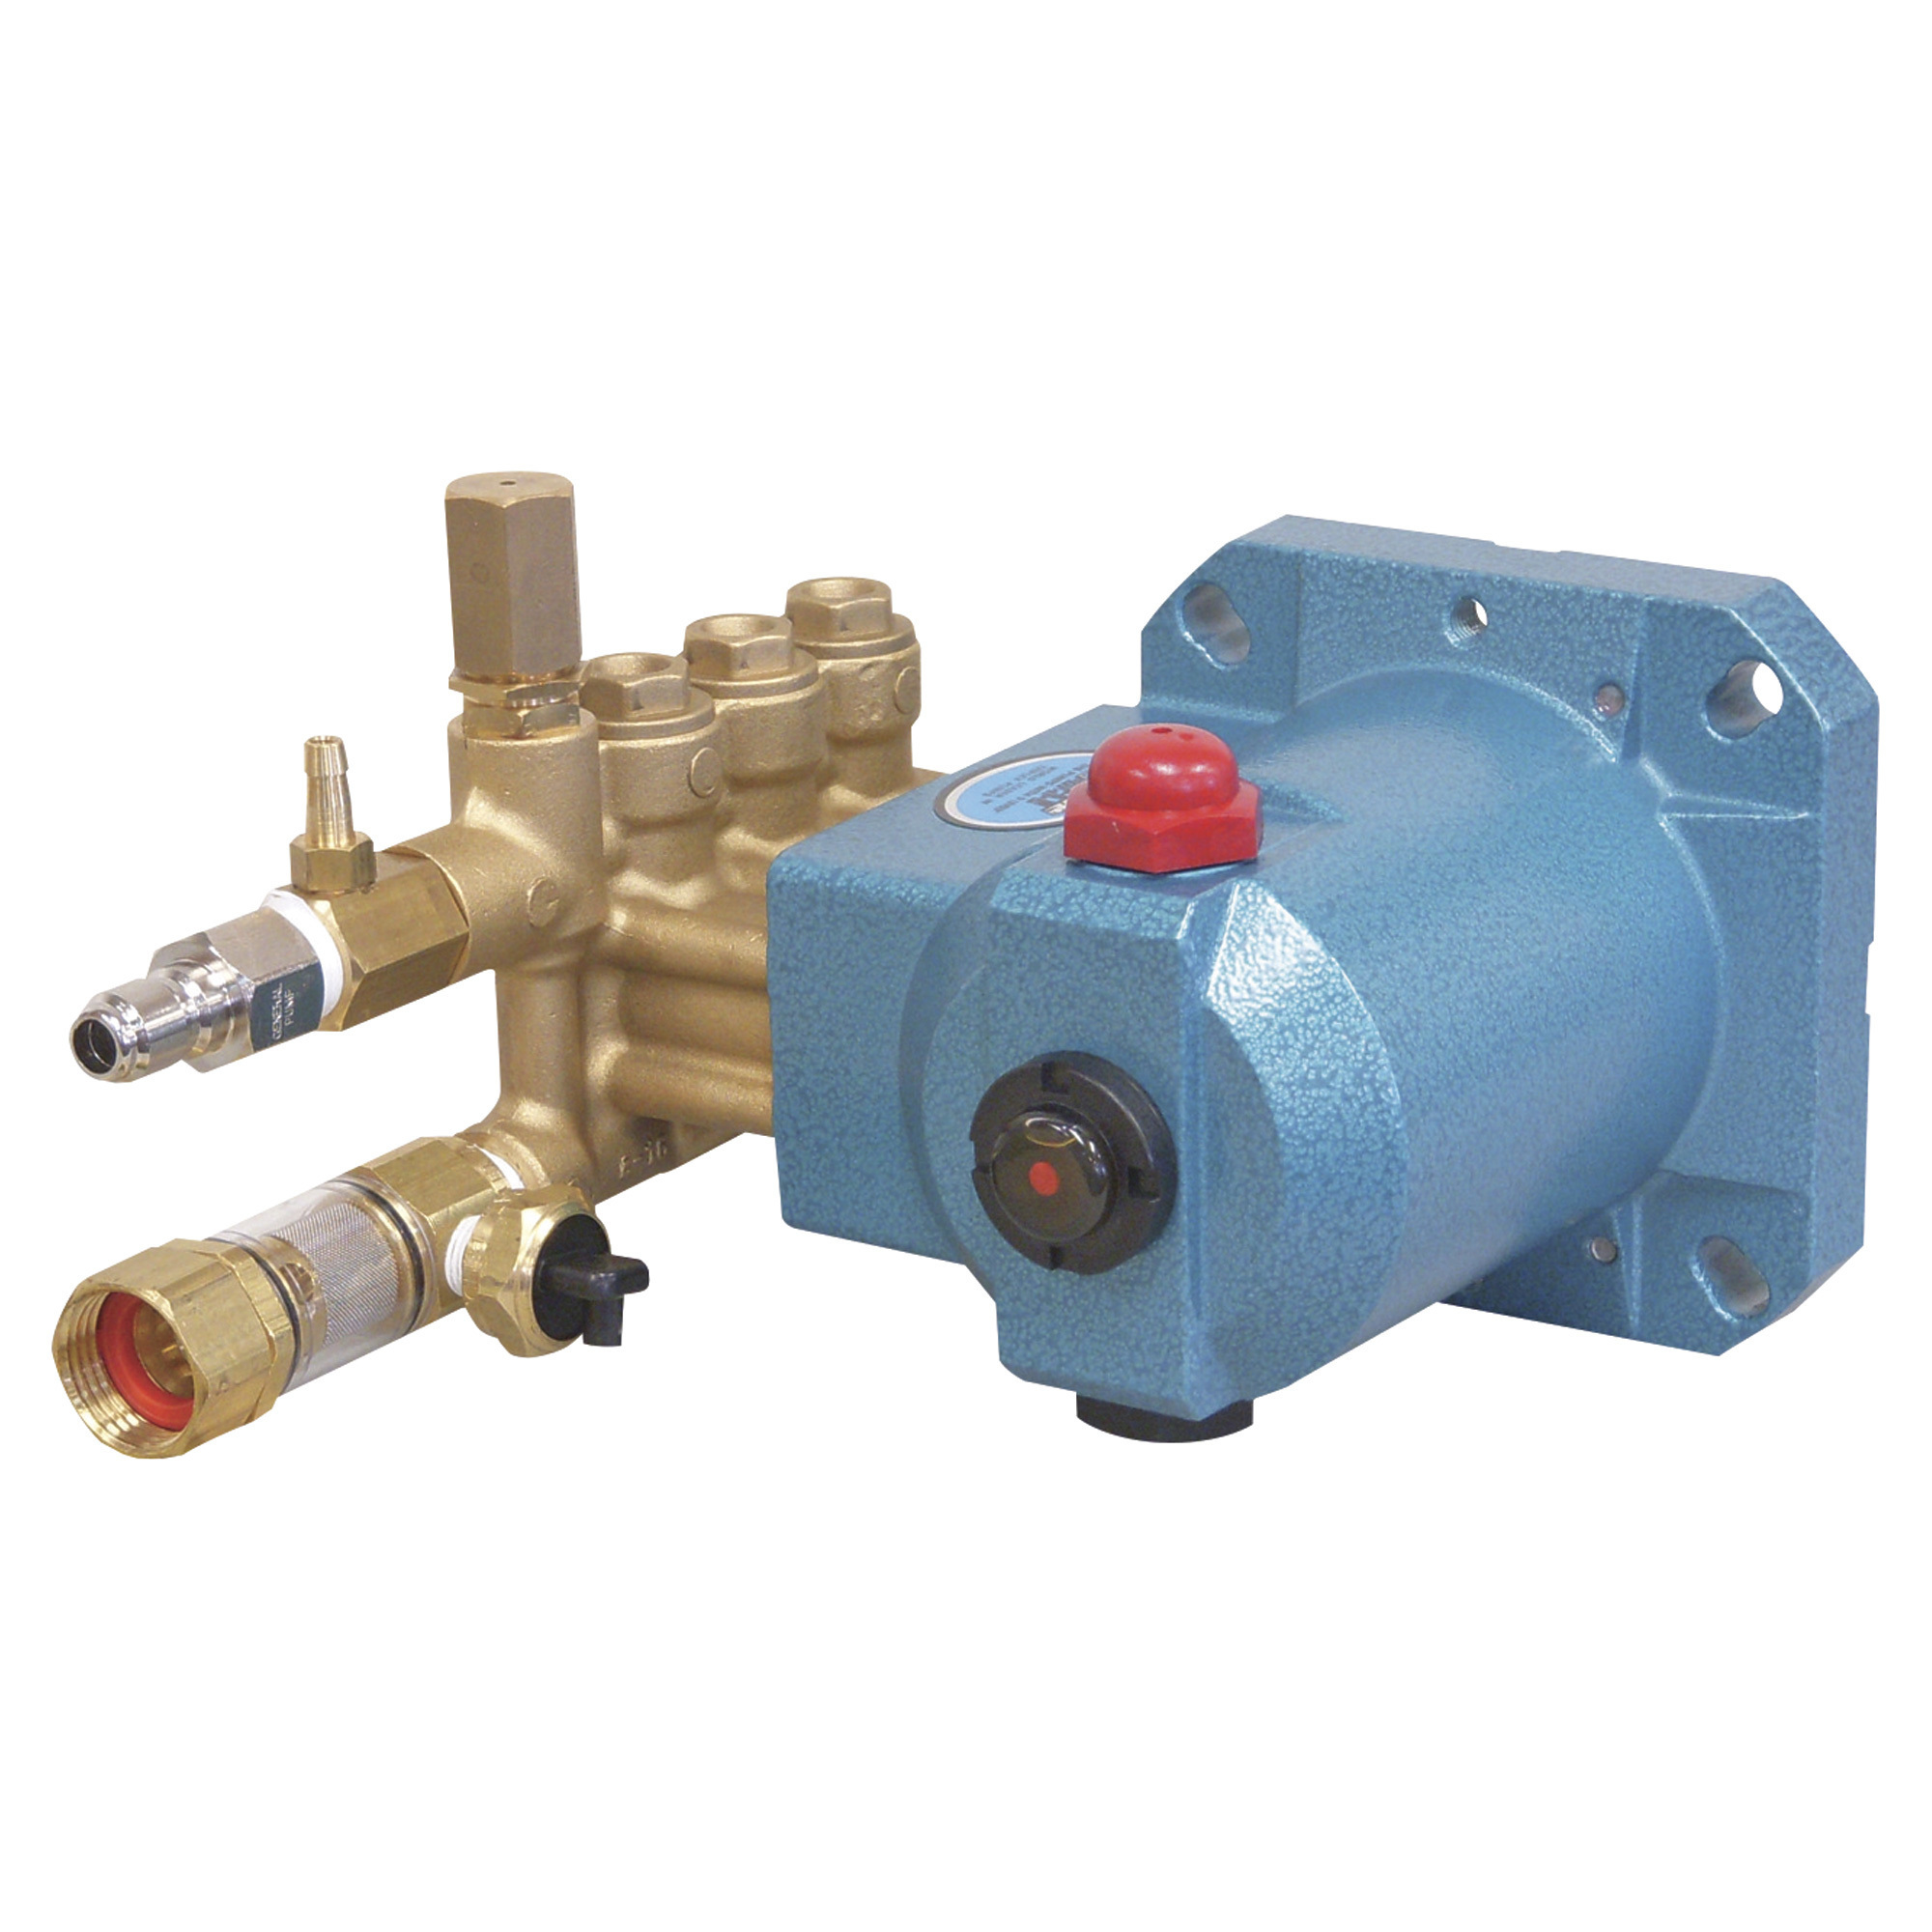 Cat Pumps Pressure Washer Pump, 2000 PSI, 1.5 GPM, Direct Drive, Electric, Model 4DX15EUIF